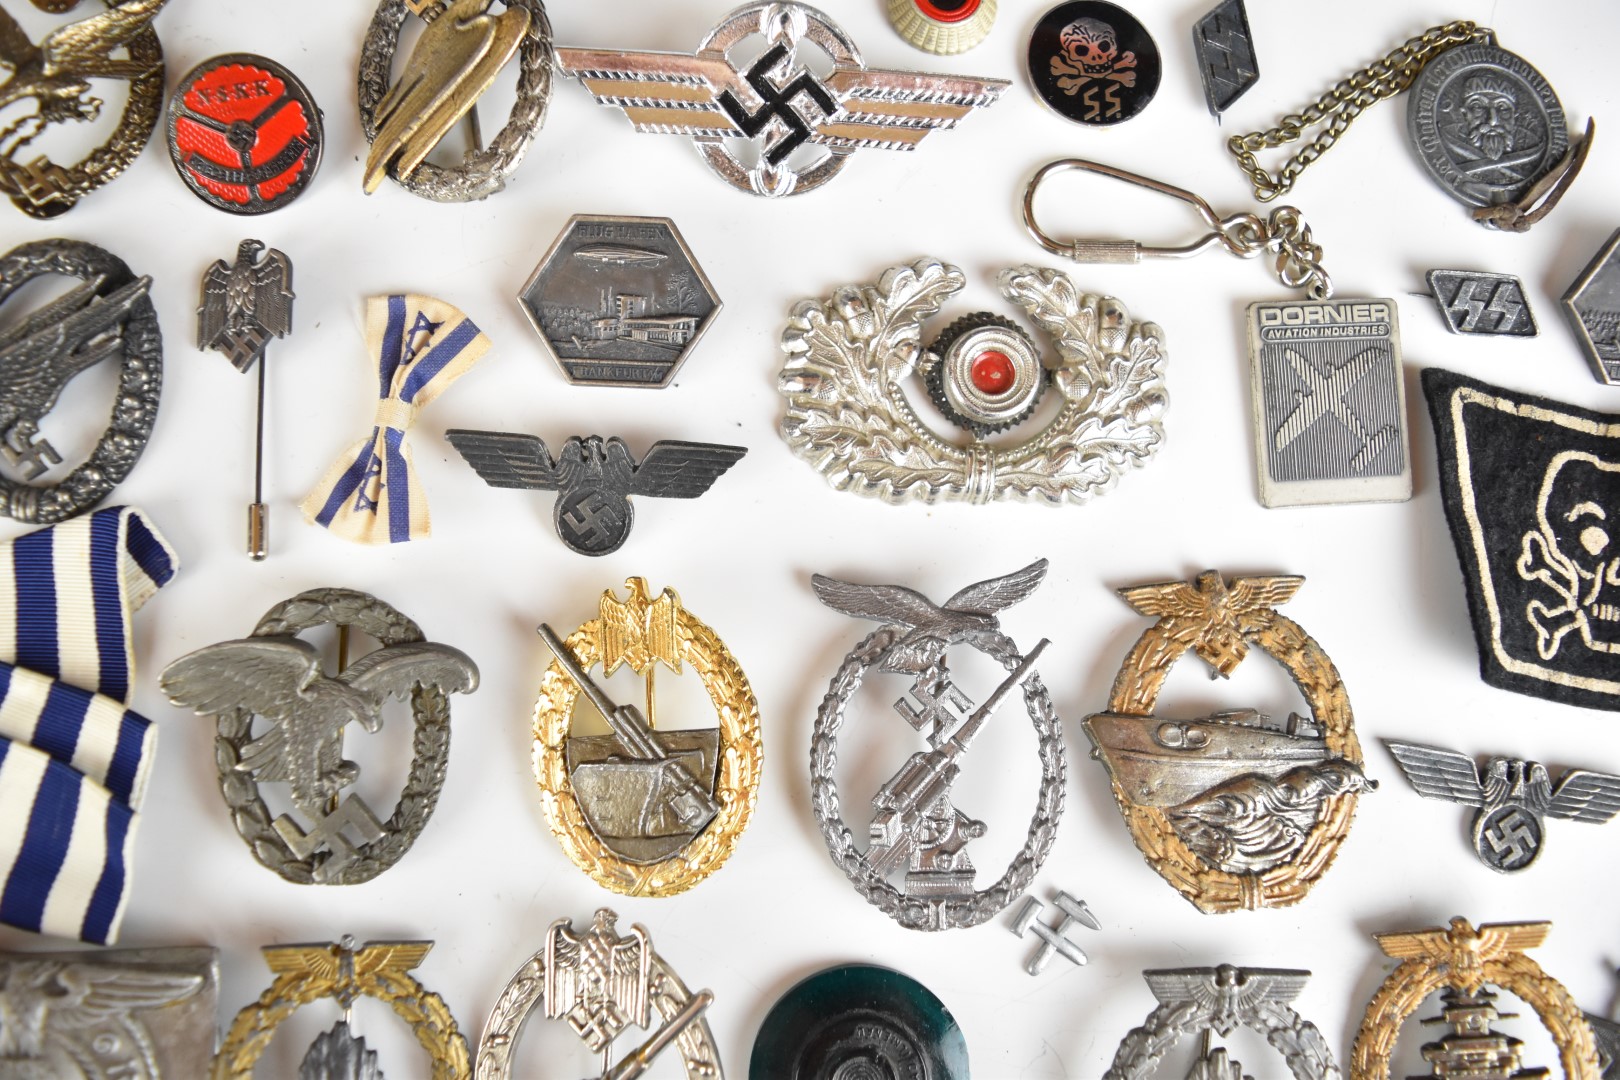 Replica German WW2 Nazi Third Reich badges, insignia and medals including High Seas Fleet, Artillery - Image 4 of 16